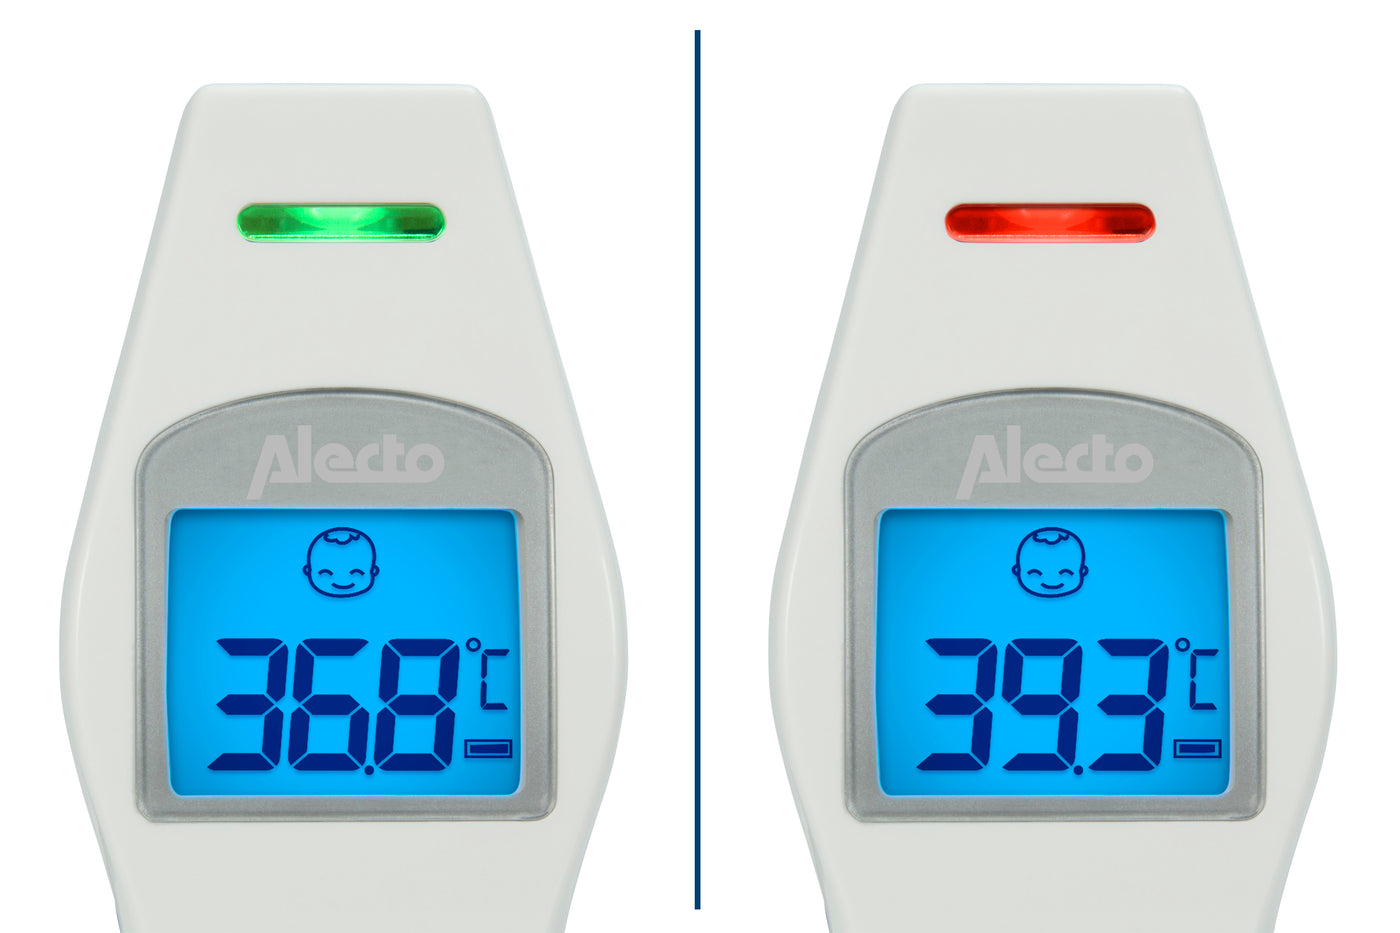 Alecto BC-37 - Voorhoofdthermometer, infrarood, wit